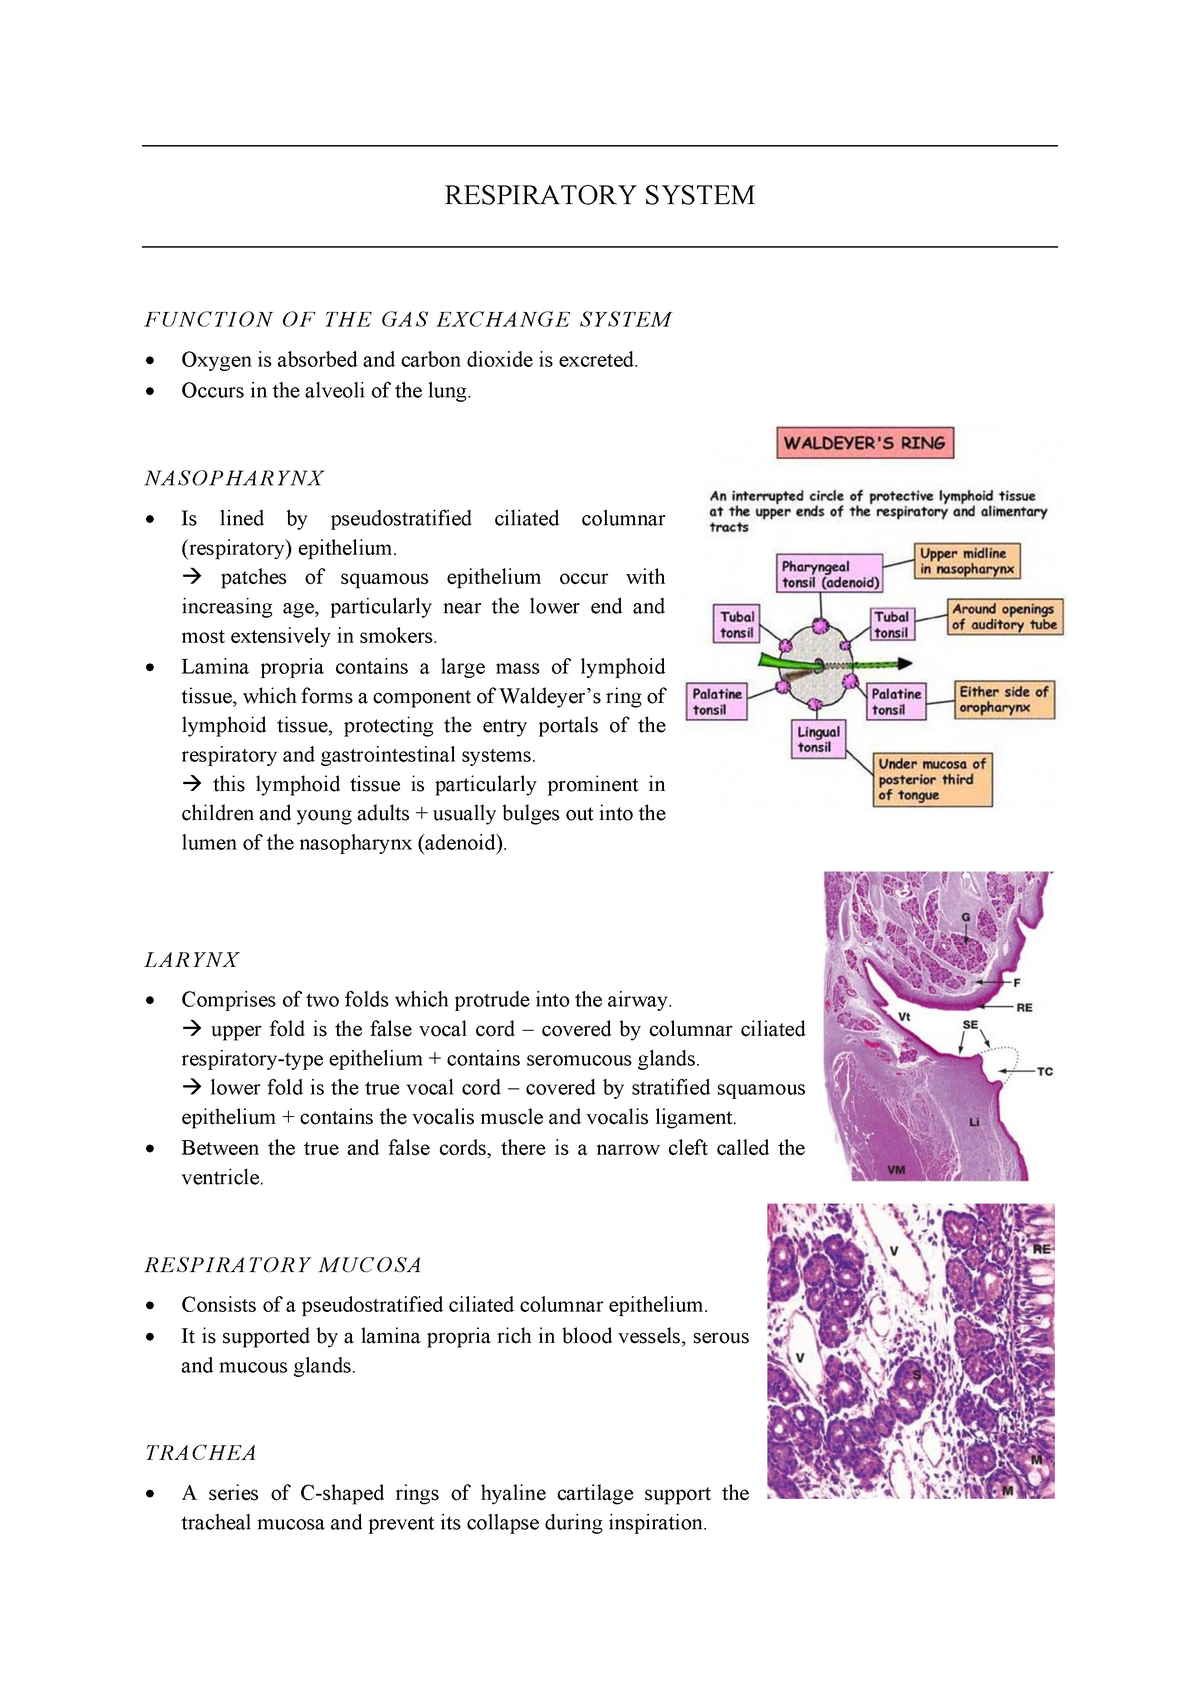 Lymphatic System | CK-12 Foundation